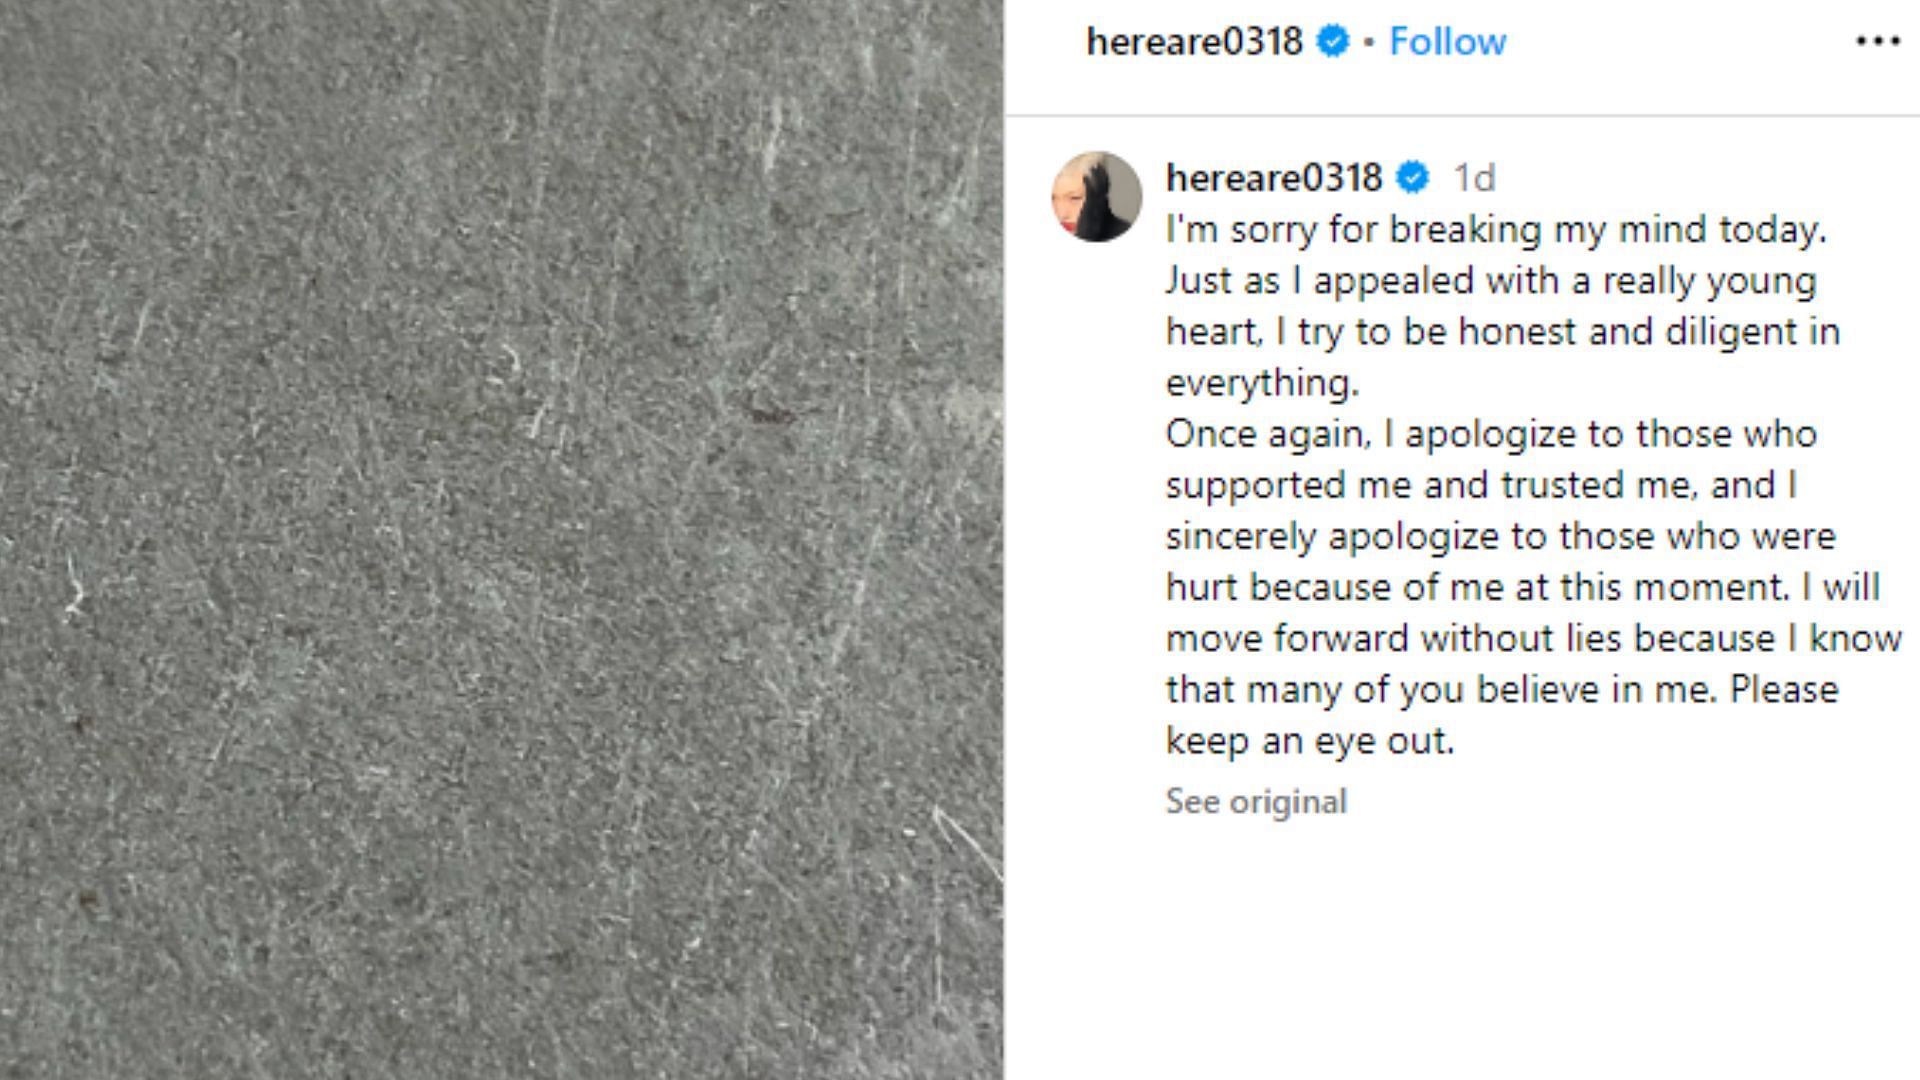 Kim Hieora apologises via an Instagram post (Image via Instagram/@hereare0318)